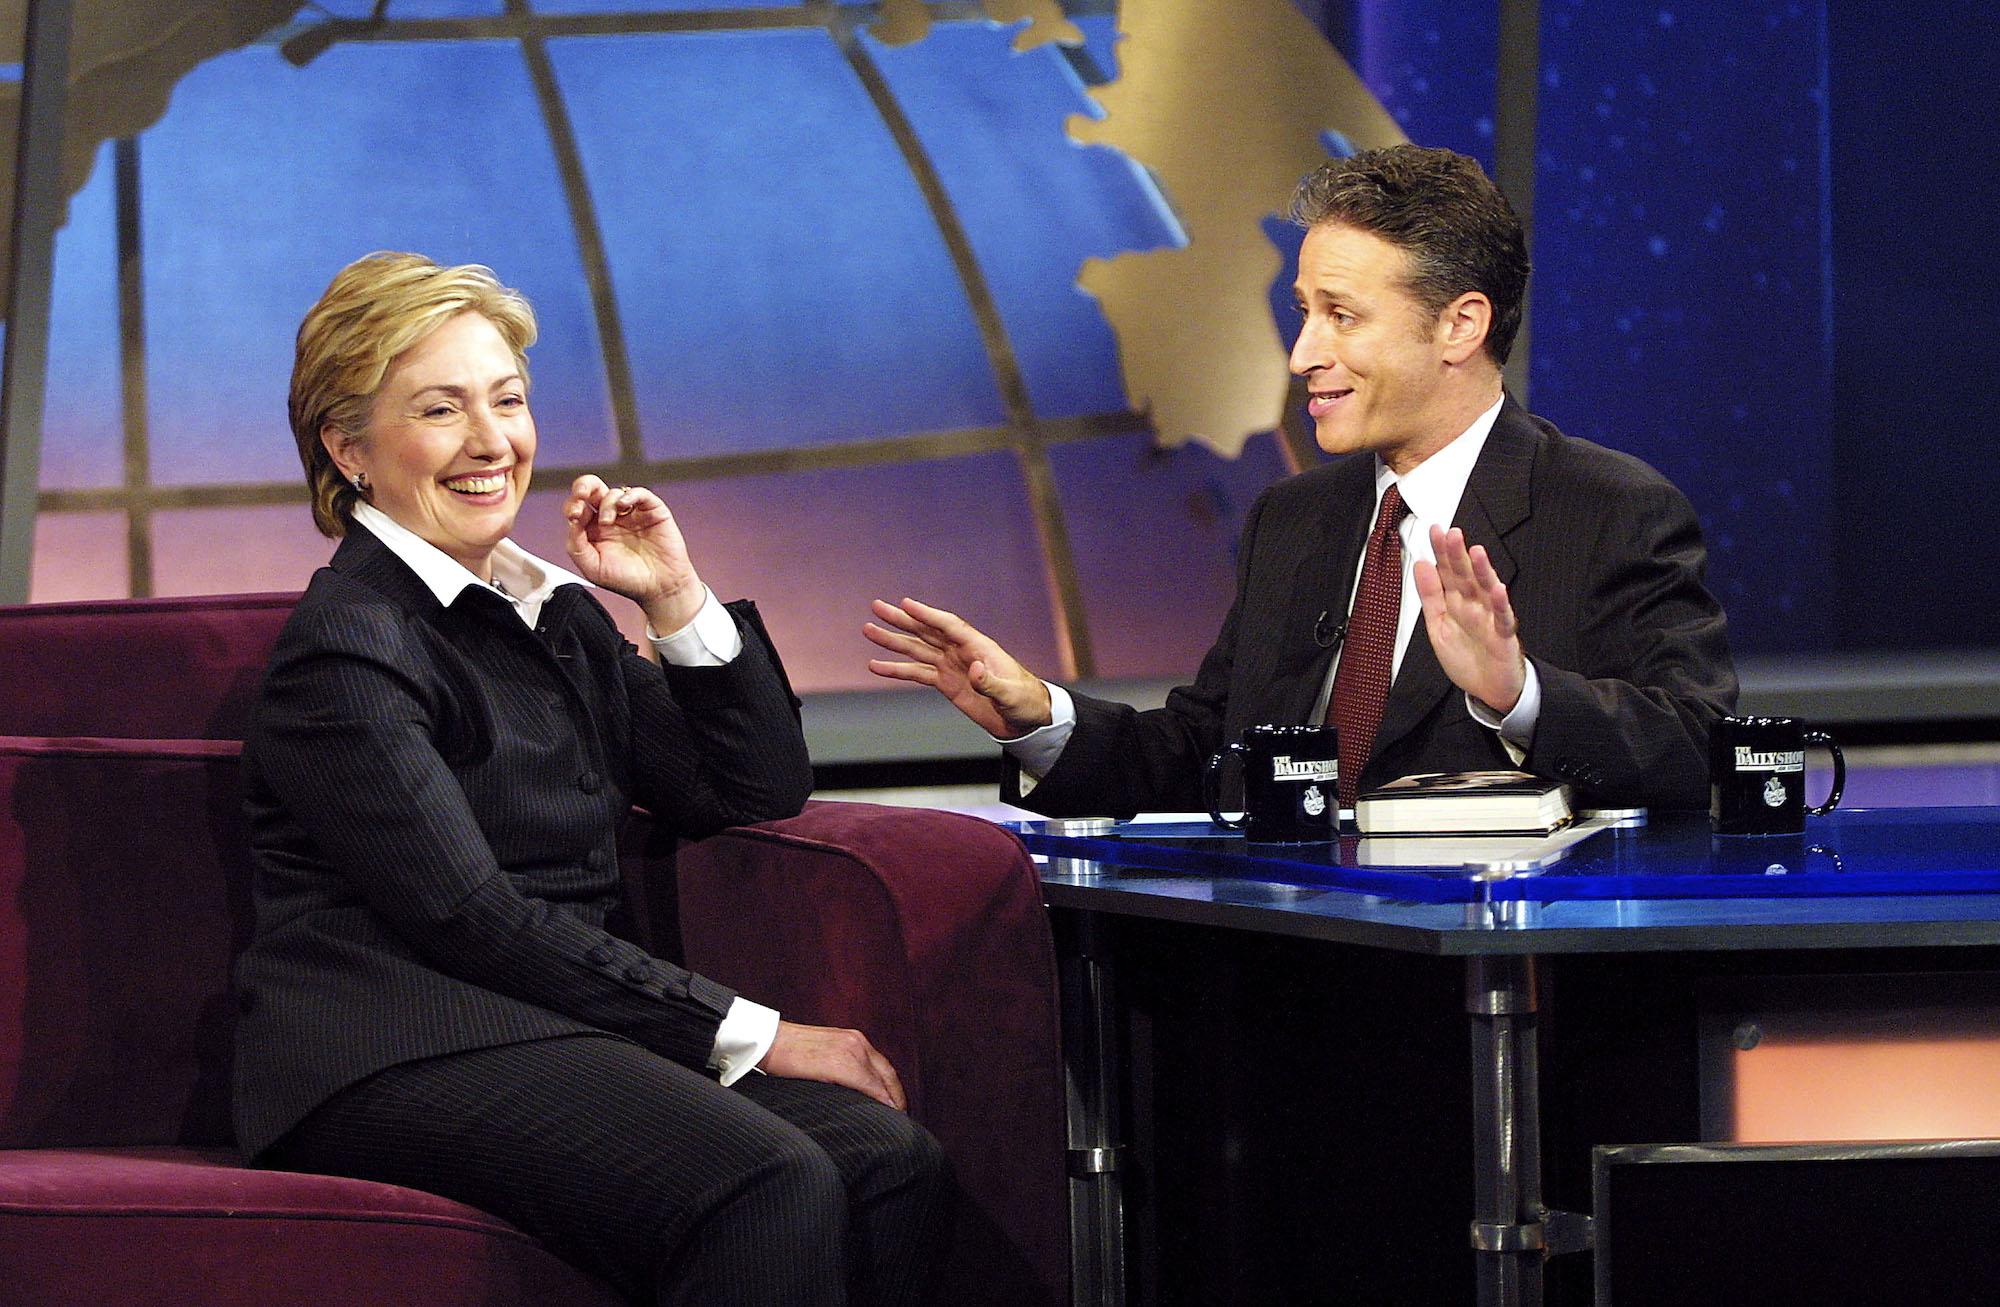 The Daily Show host Jon Stewart interviews Hillary Clinton